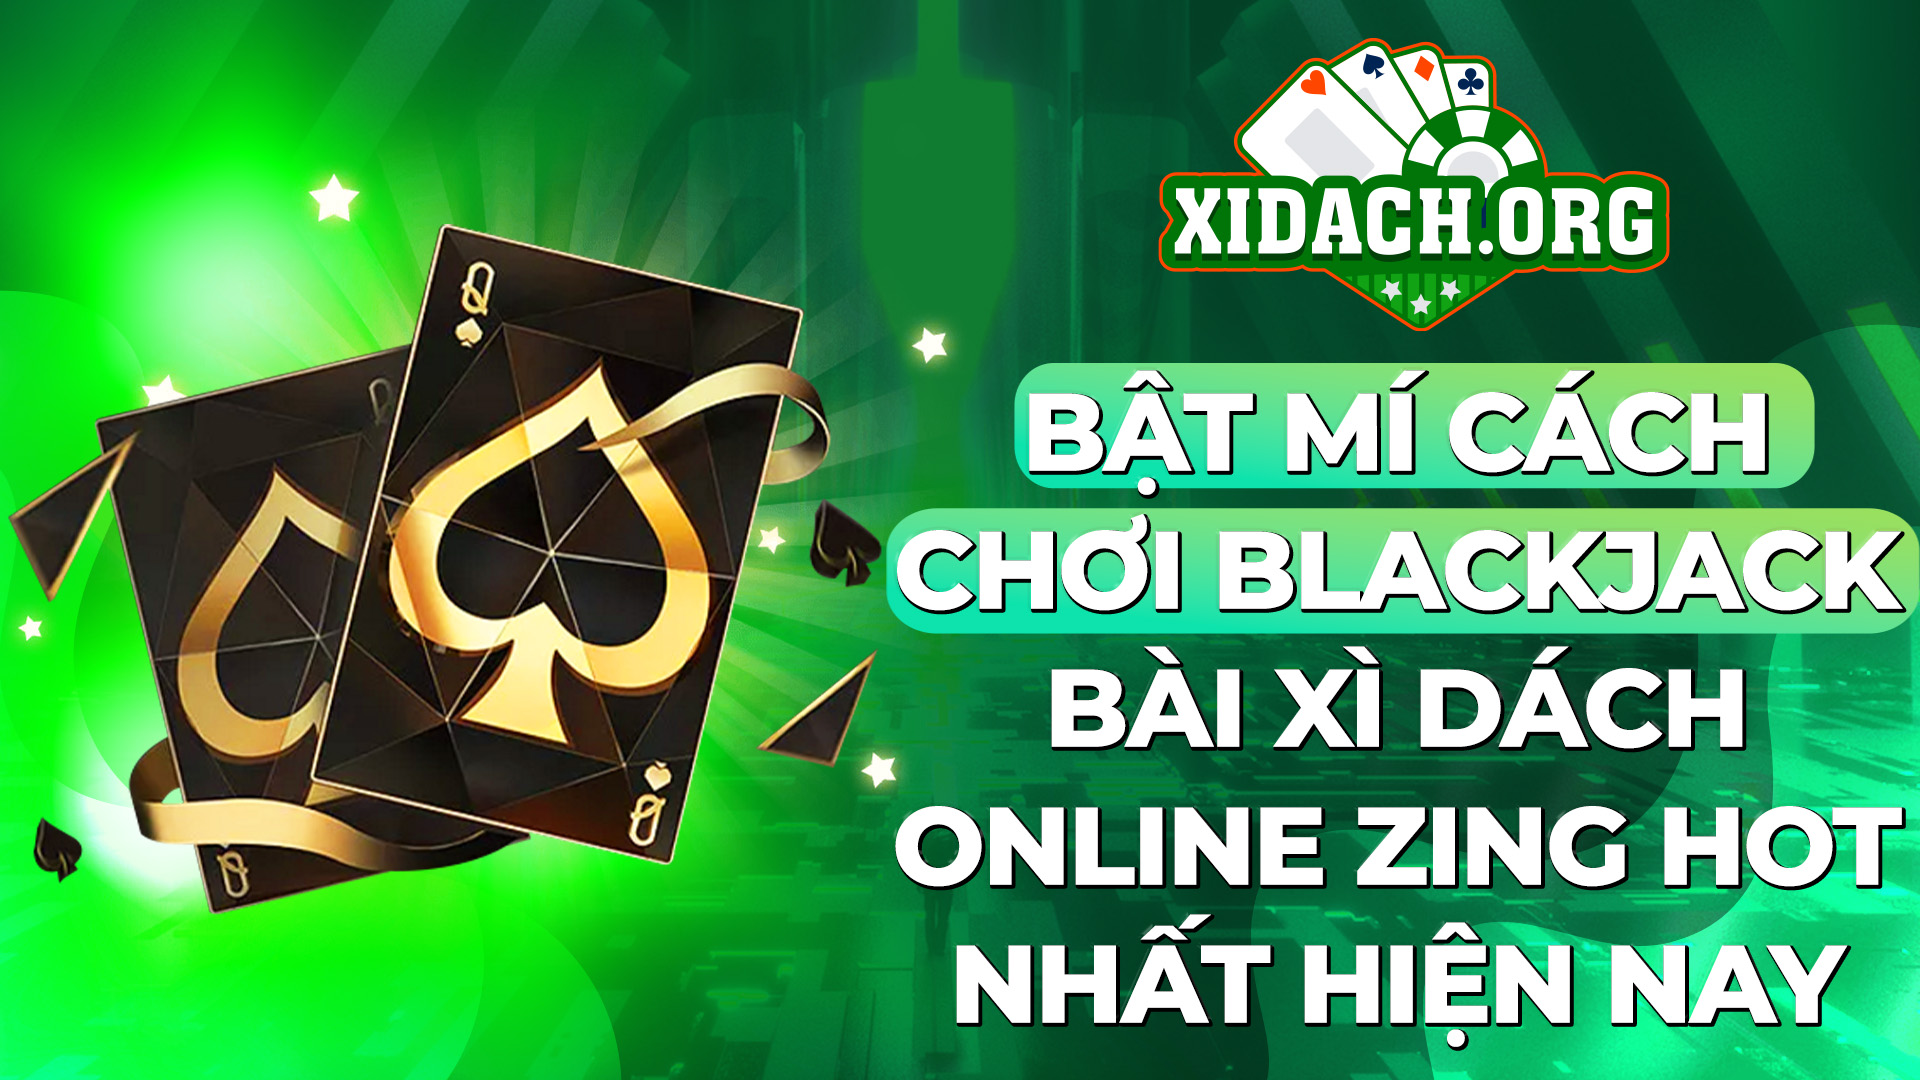 877 Bat Mi Cach Choi Blackjack Bai Xi Dach Online Zing Hot Nhat Hien Nay